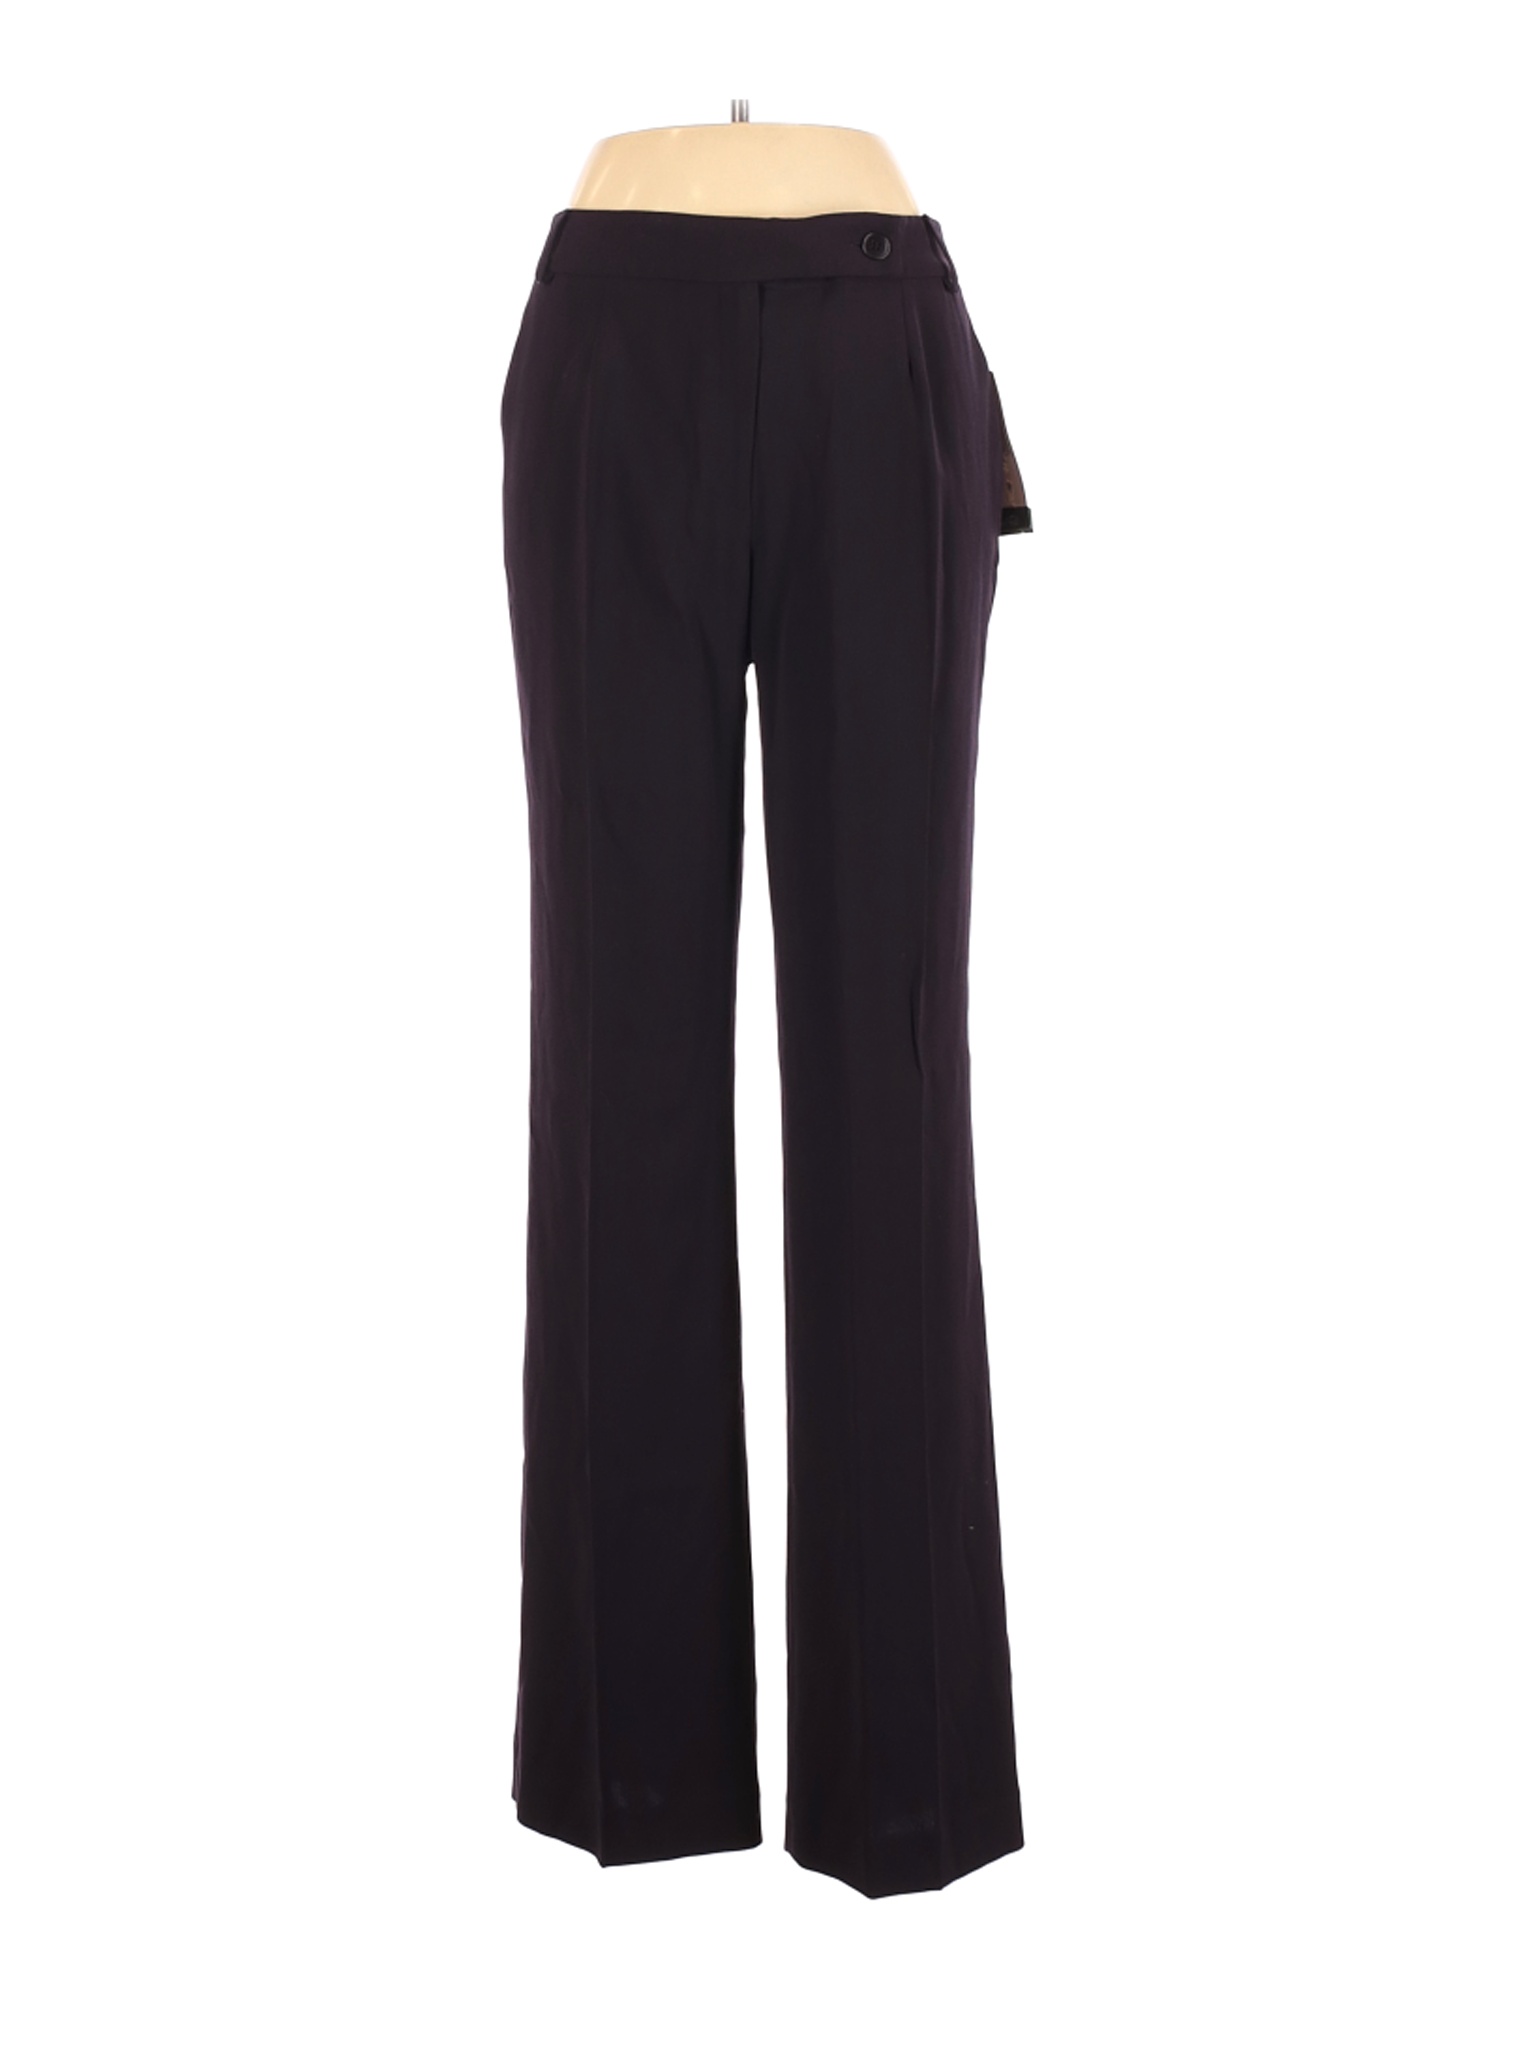 NWT Jones New York Women Black Dress Pants 8 | eBay